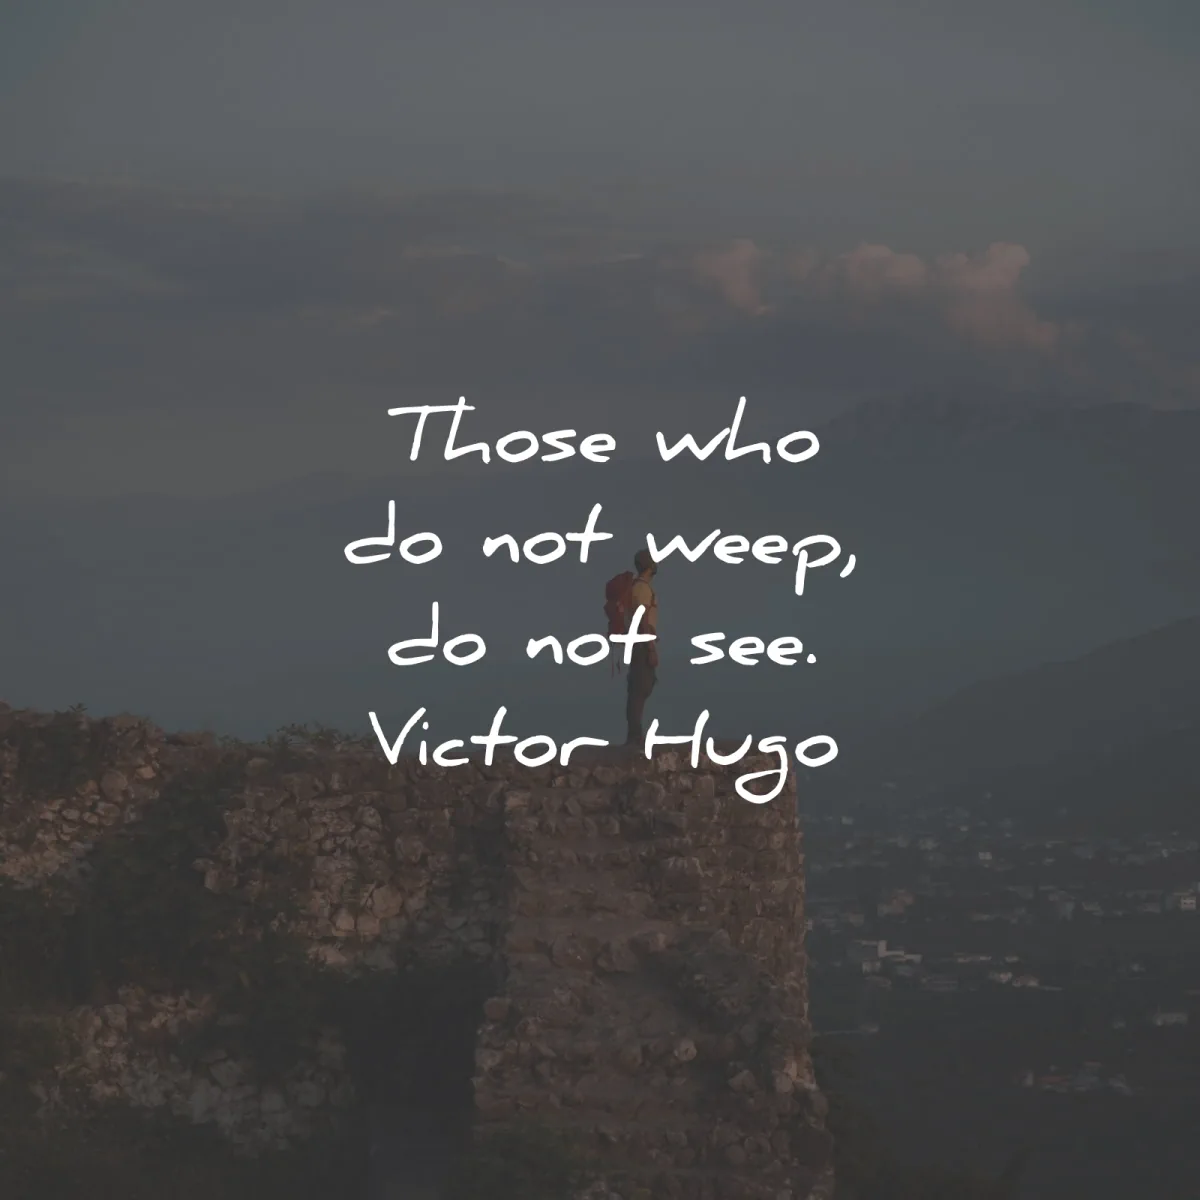 sad quotes those who weep see victor hugo wisdom